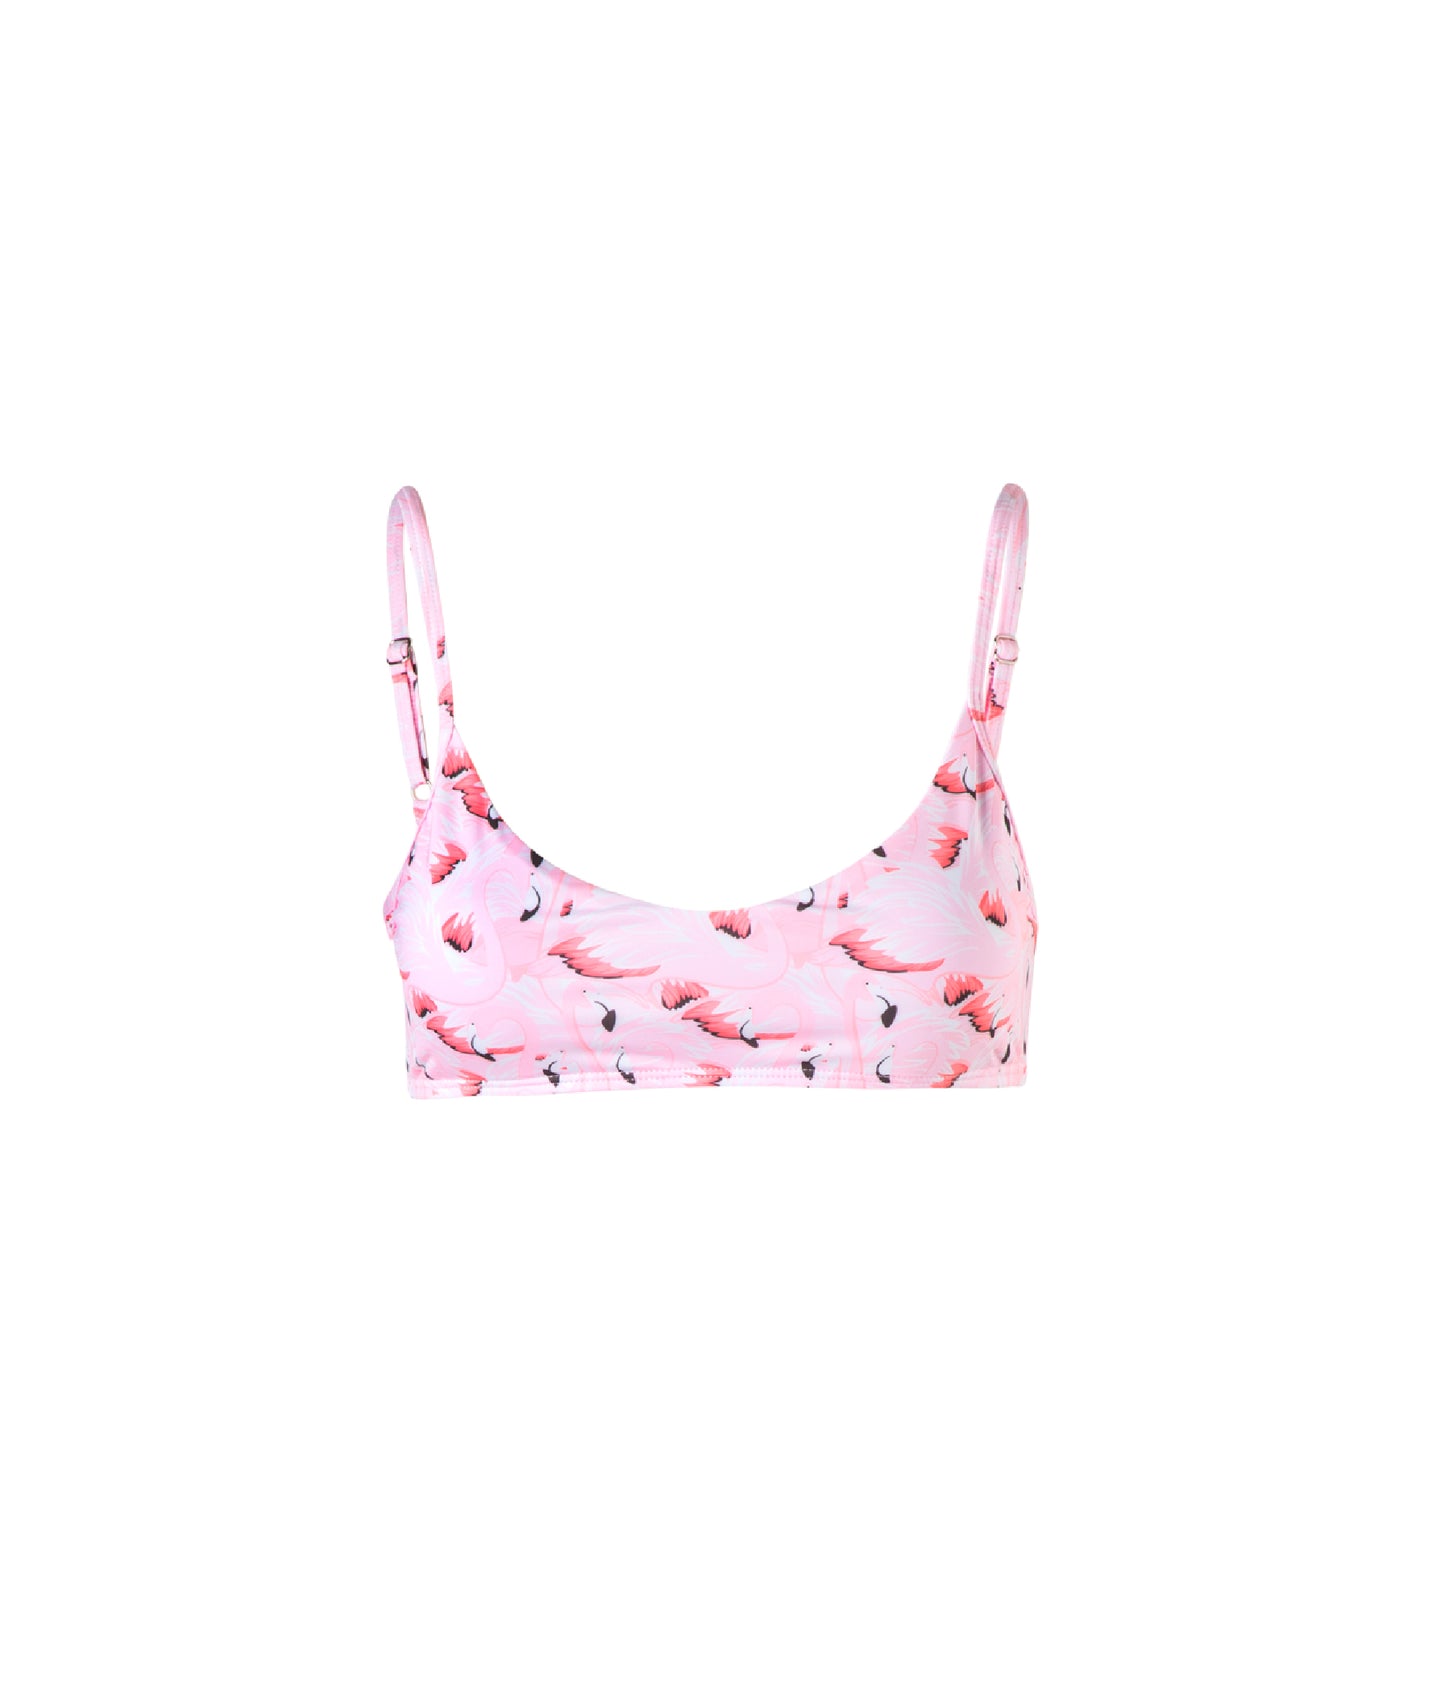 Verdelimon - Bikini Top - Sol - Printed - Pink Flamingos - Front